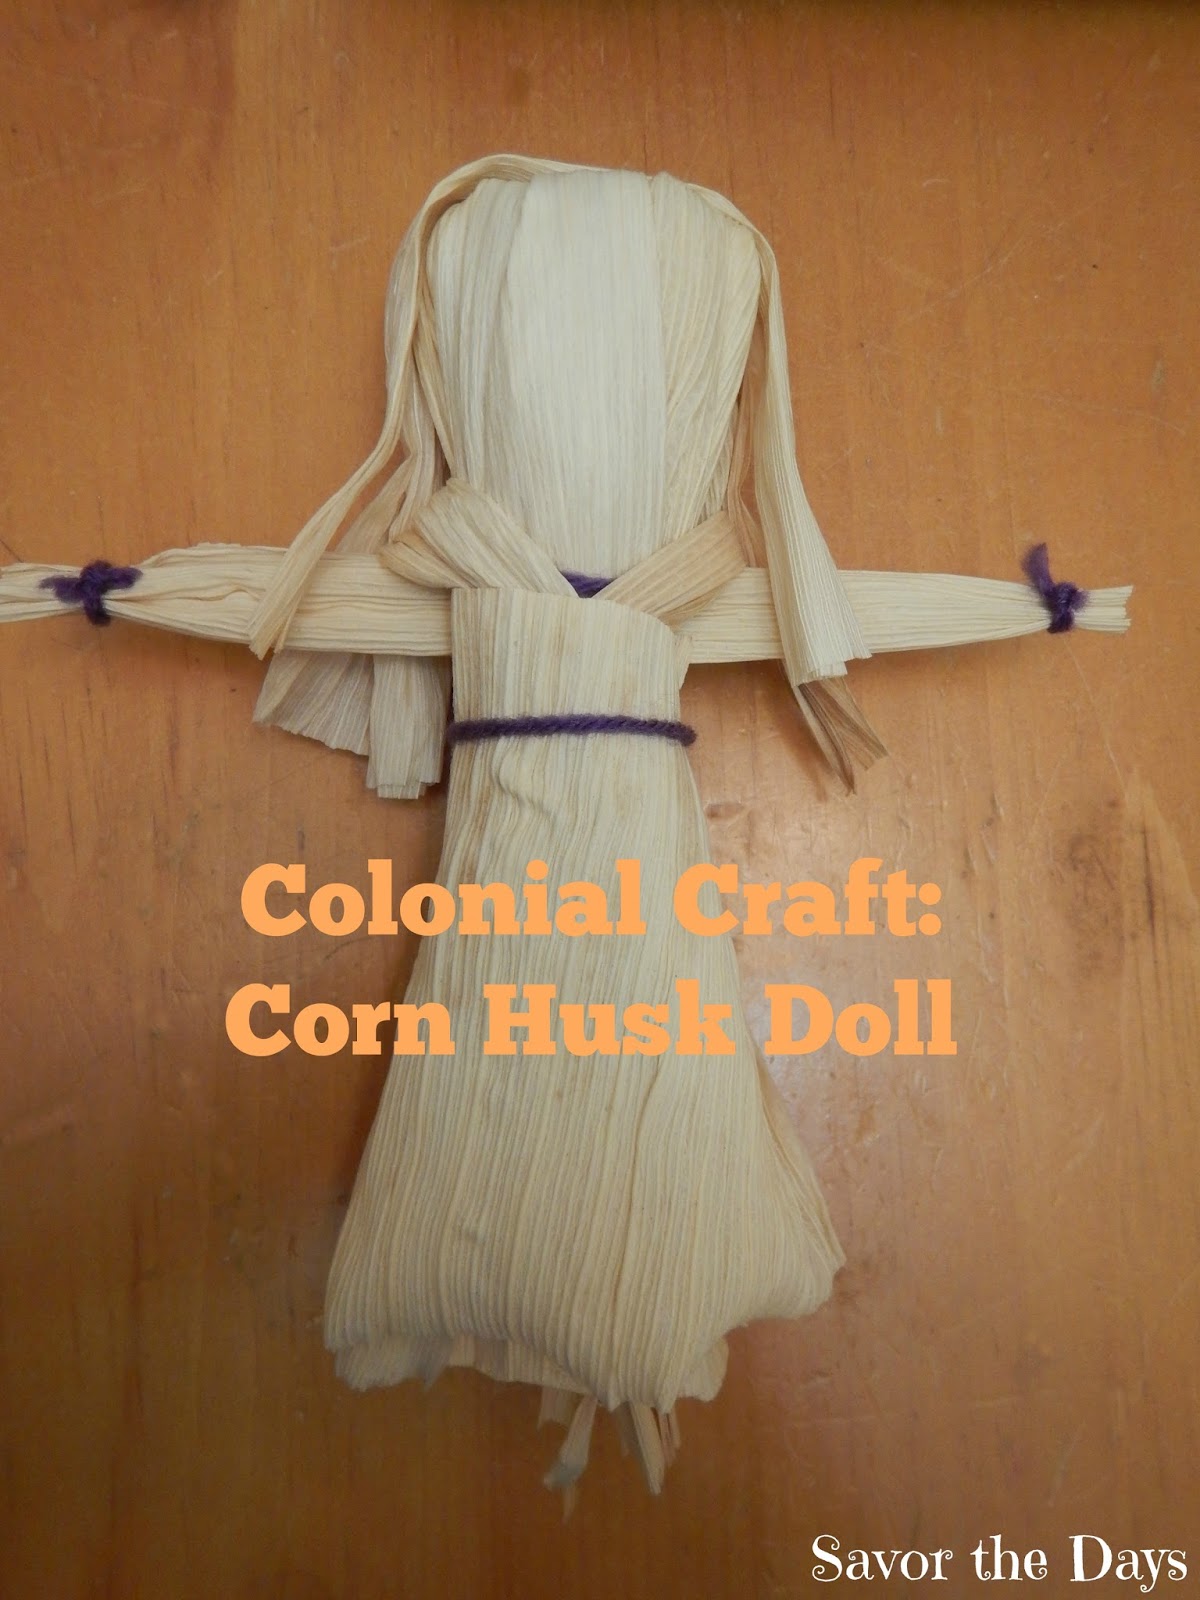 How To Make Corn Husk Dolls